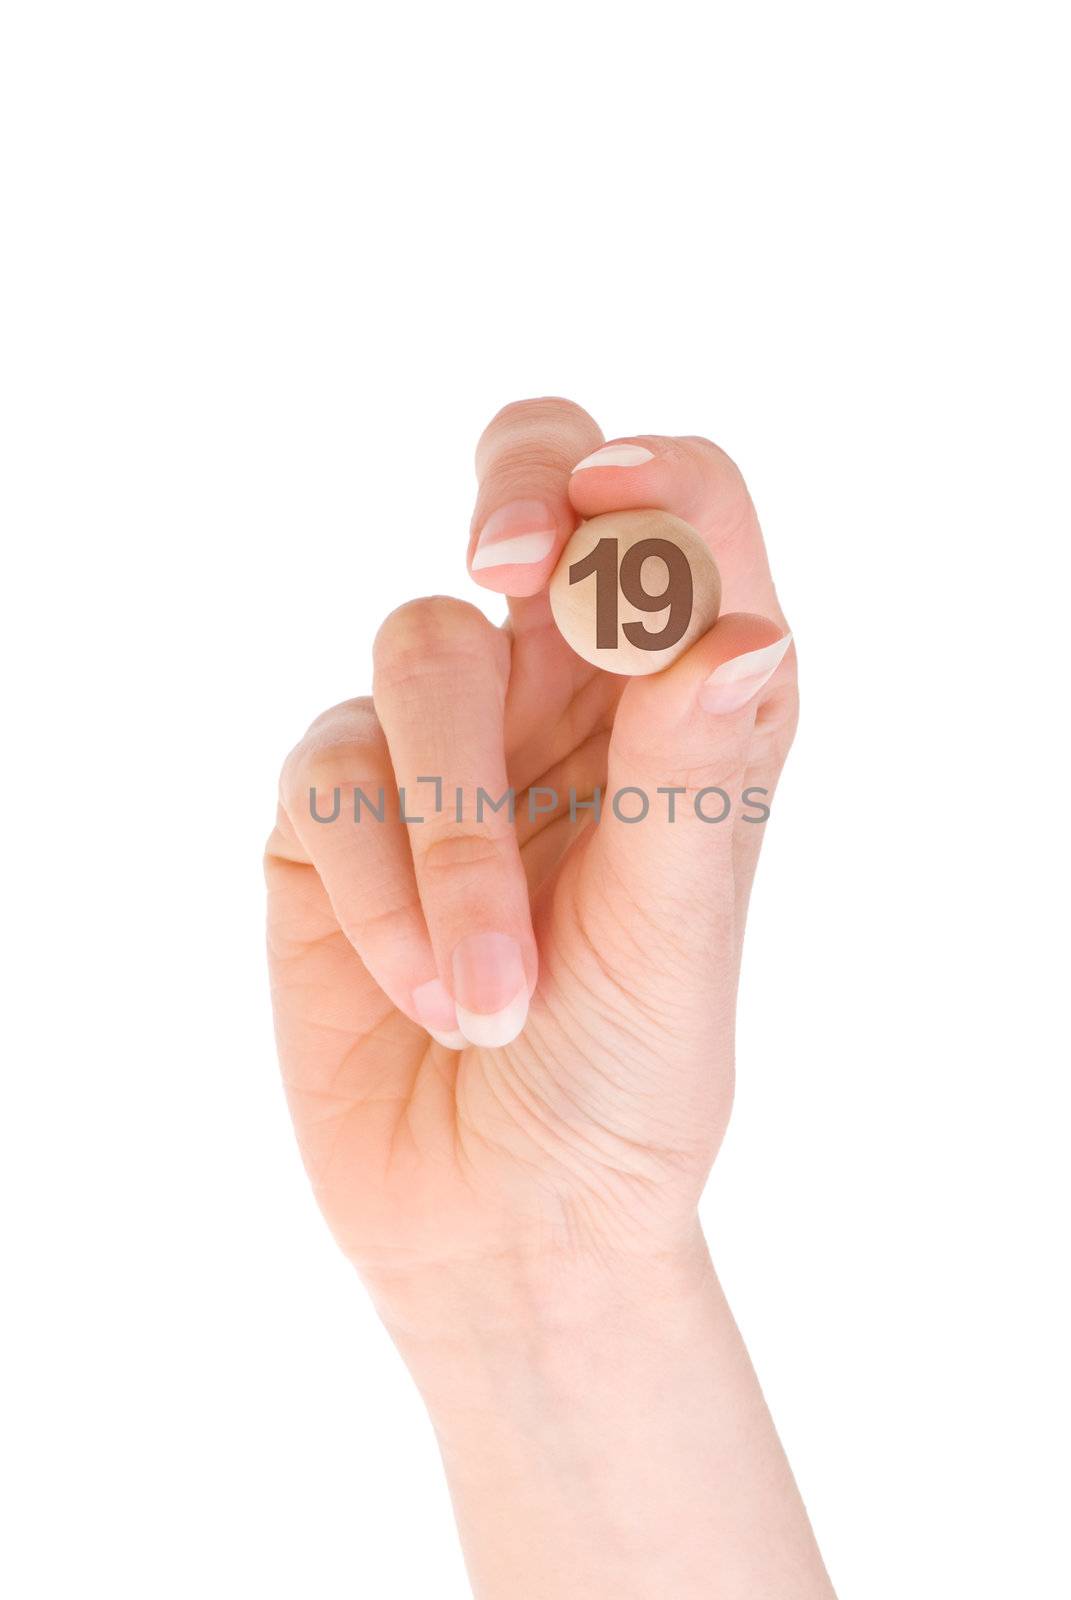 Nineteenth bingo ball in the woman's hand